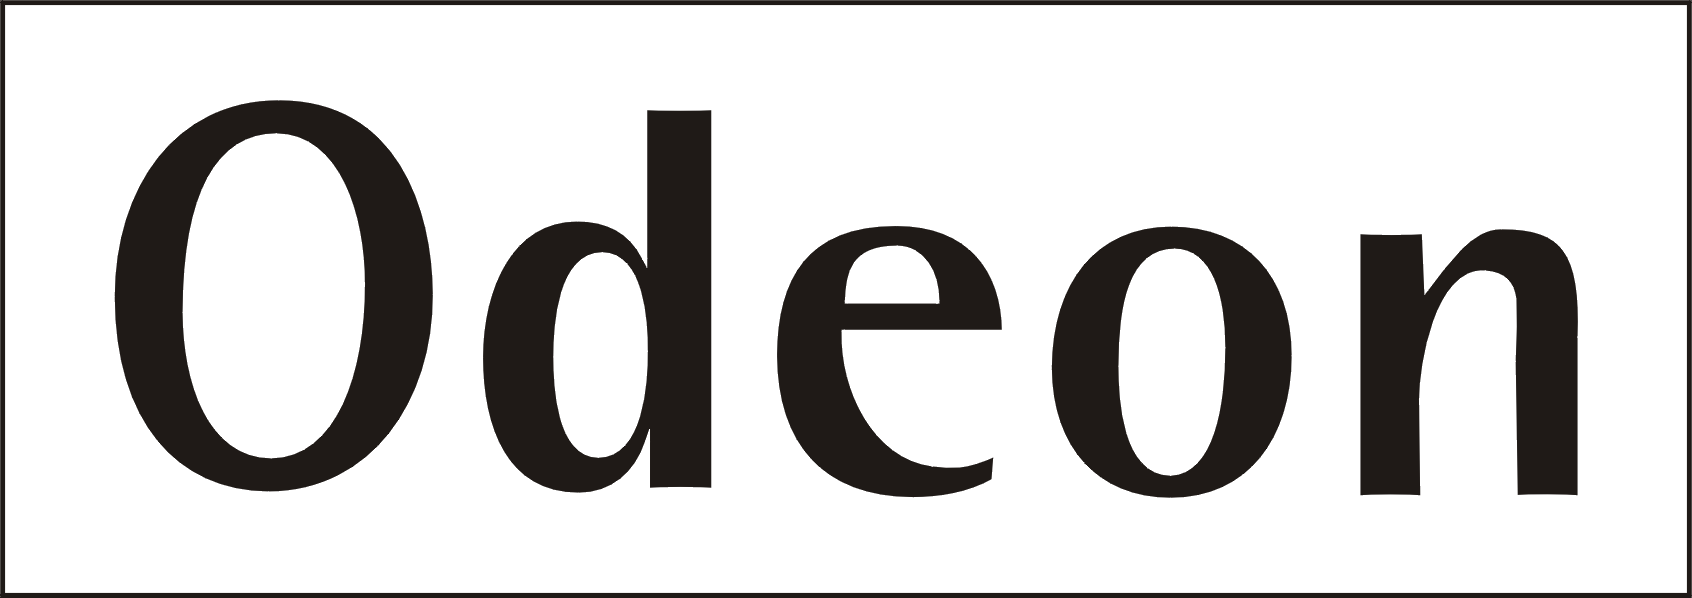 Logo Odeon